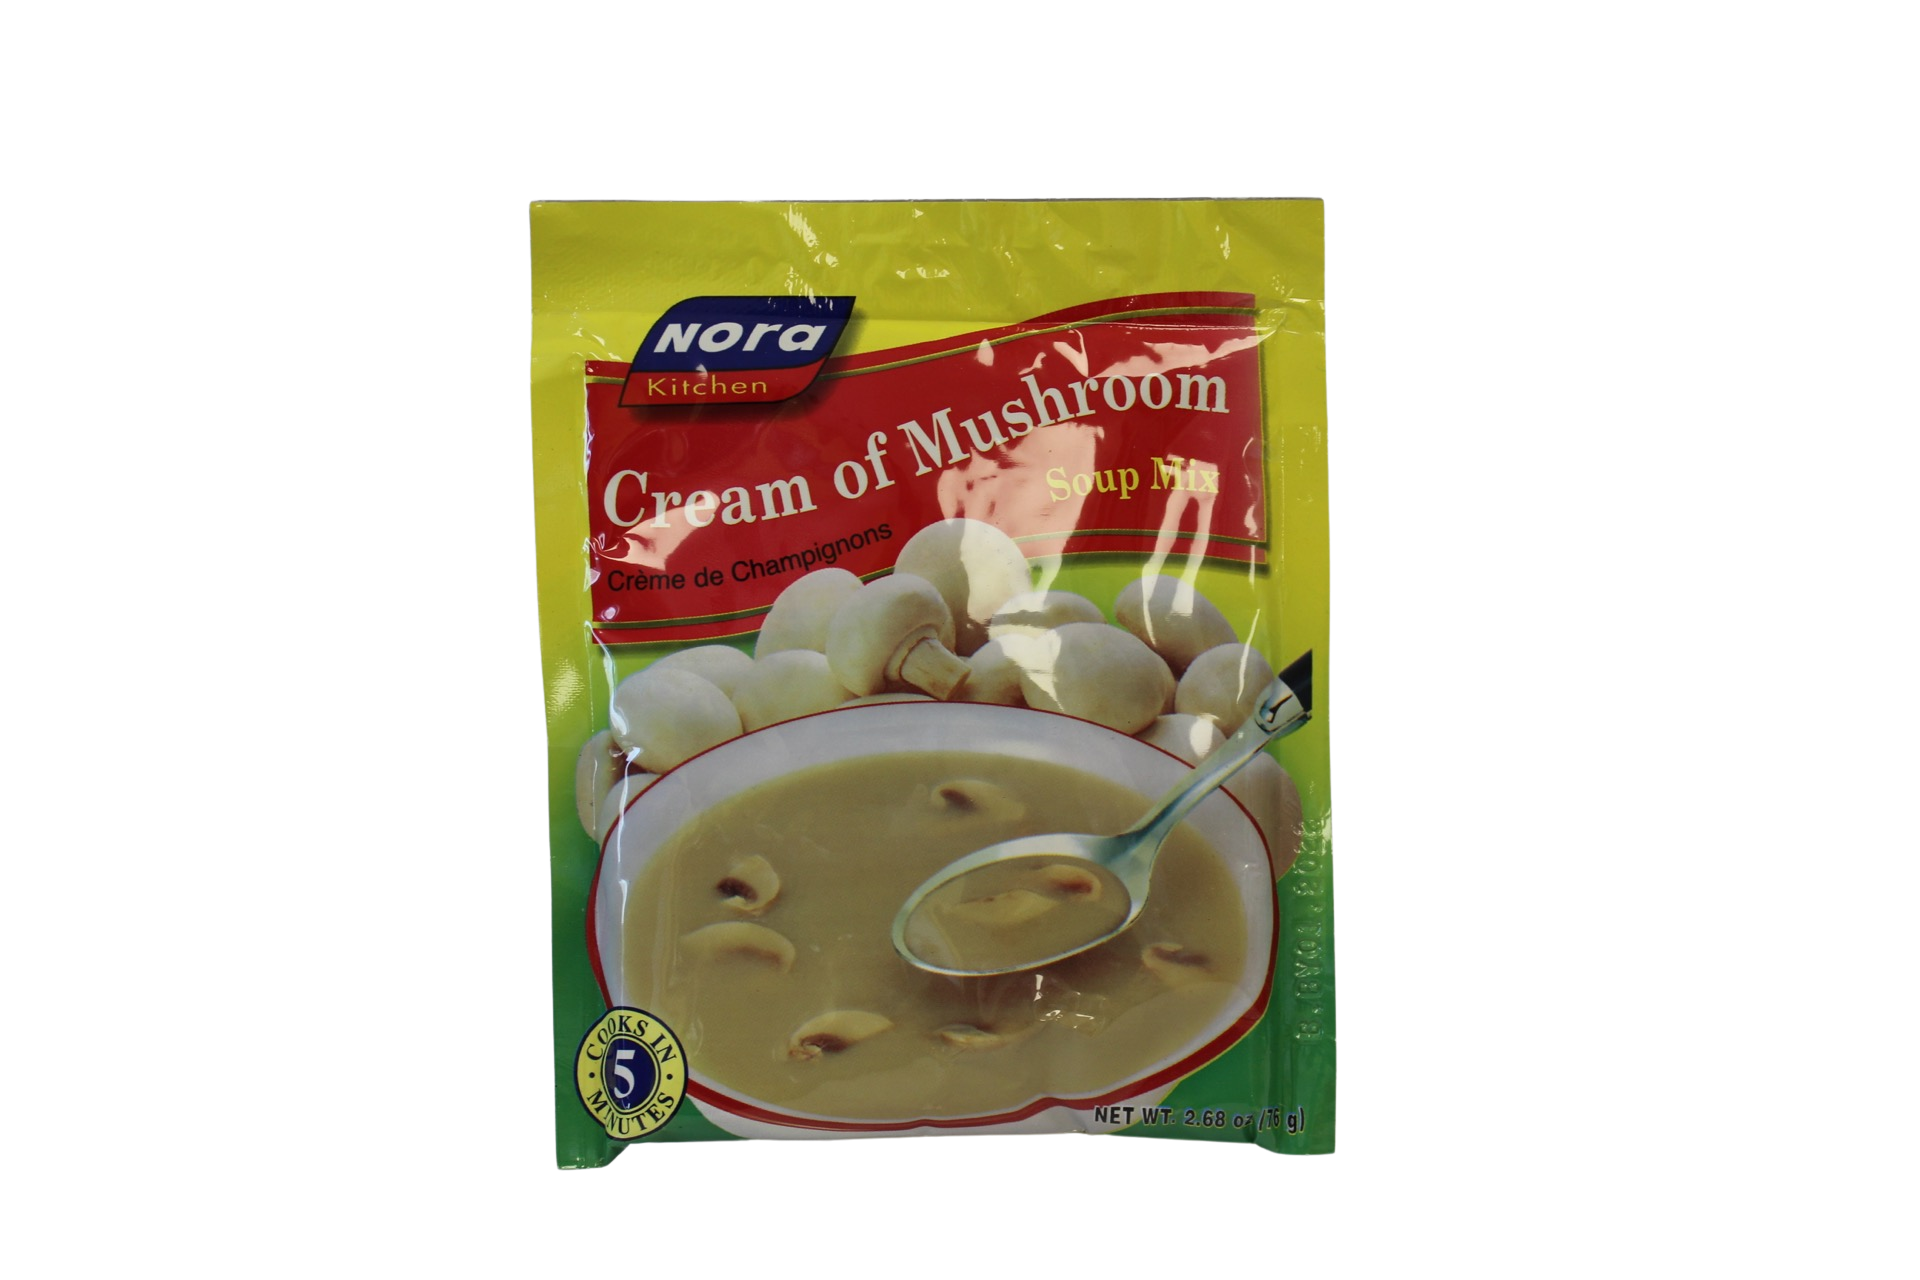 Nora Kitchen Cream of Mushroom Soup Mix 76g